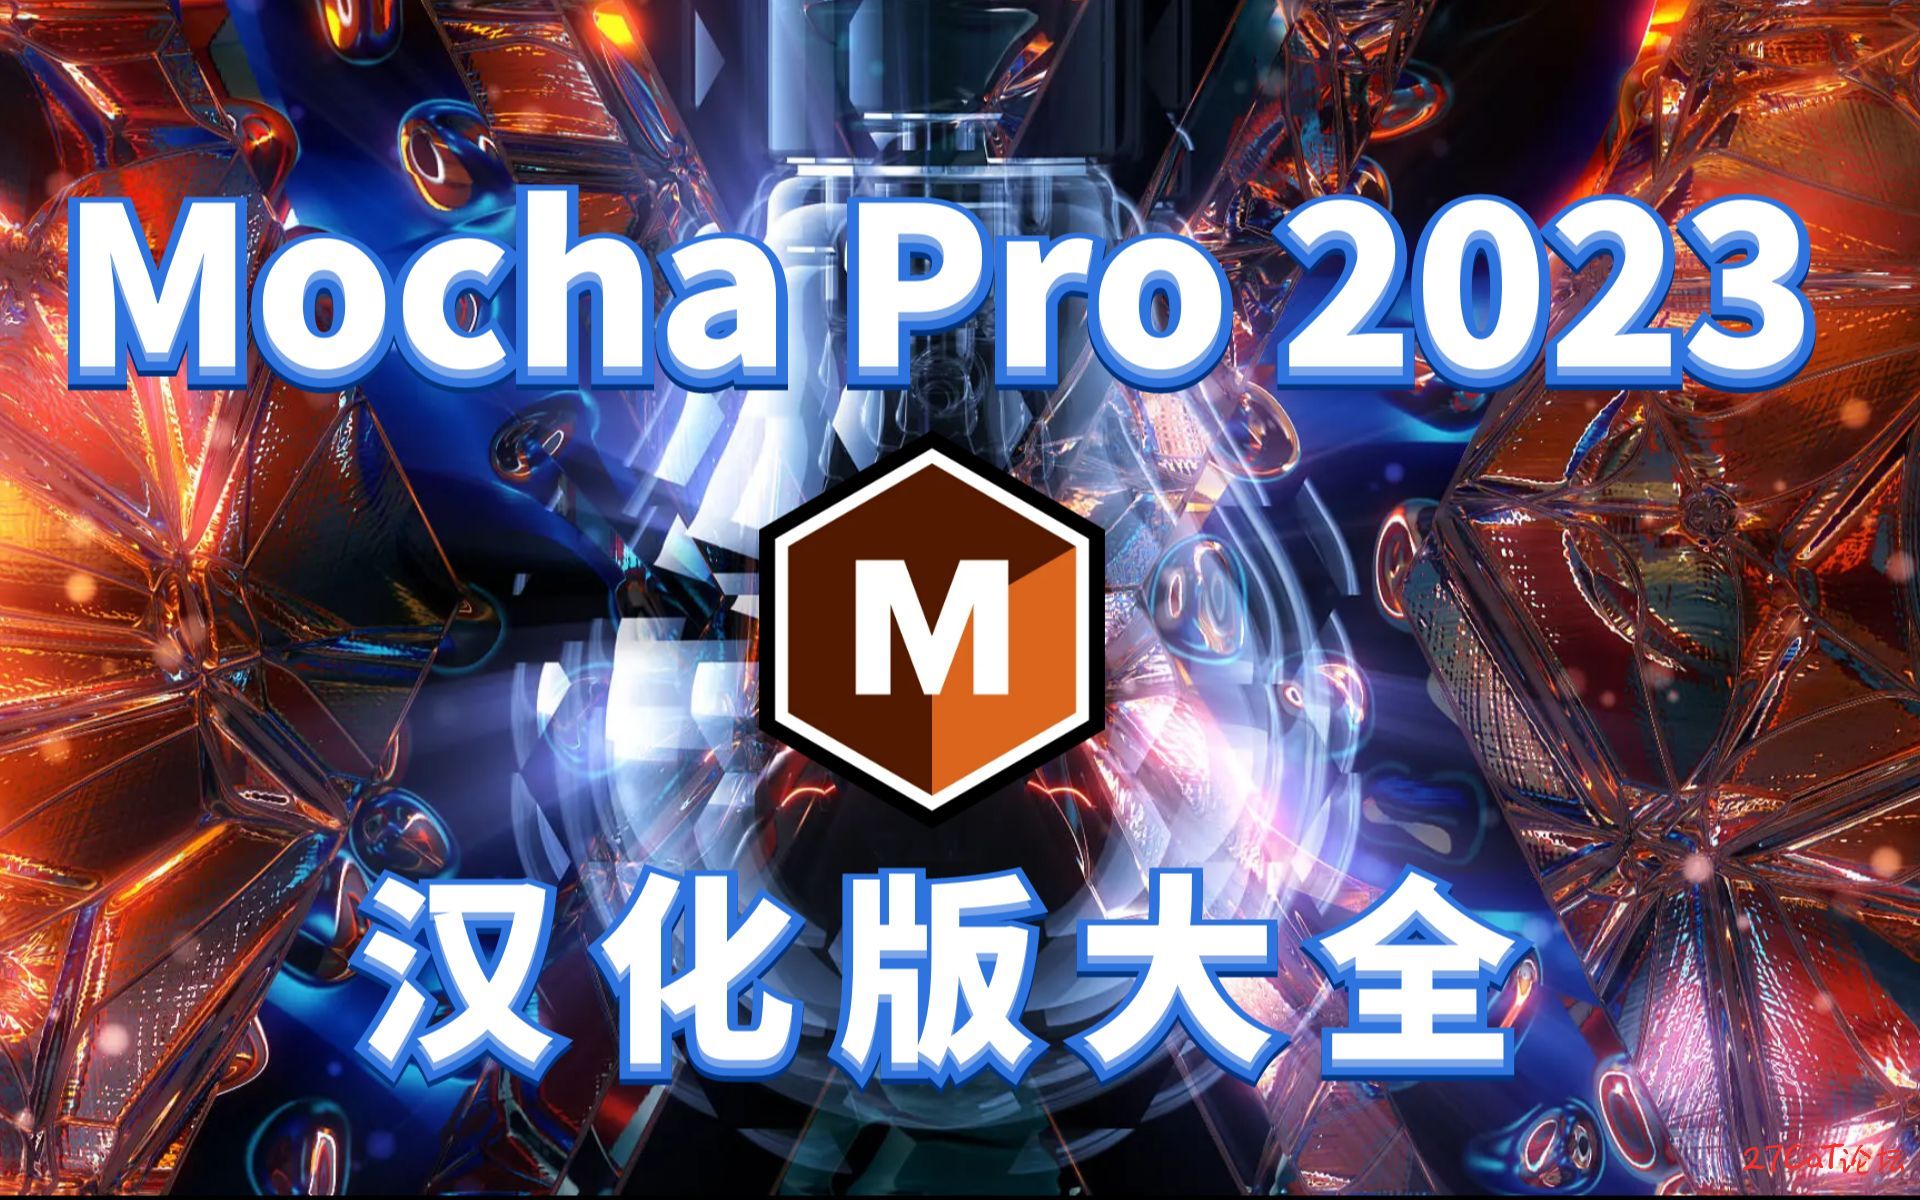 Mocha Pro 2023 v10.0.3.15 free download